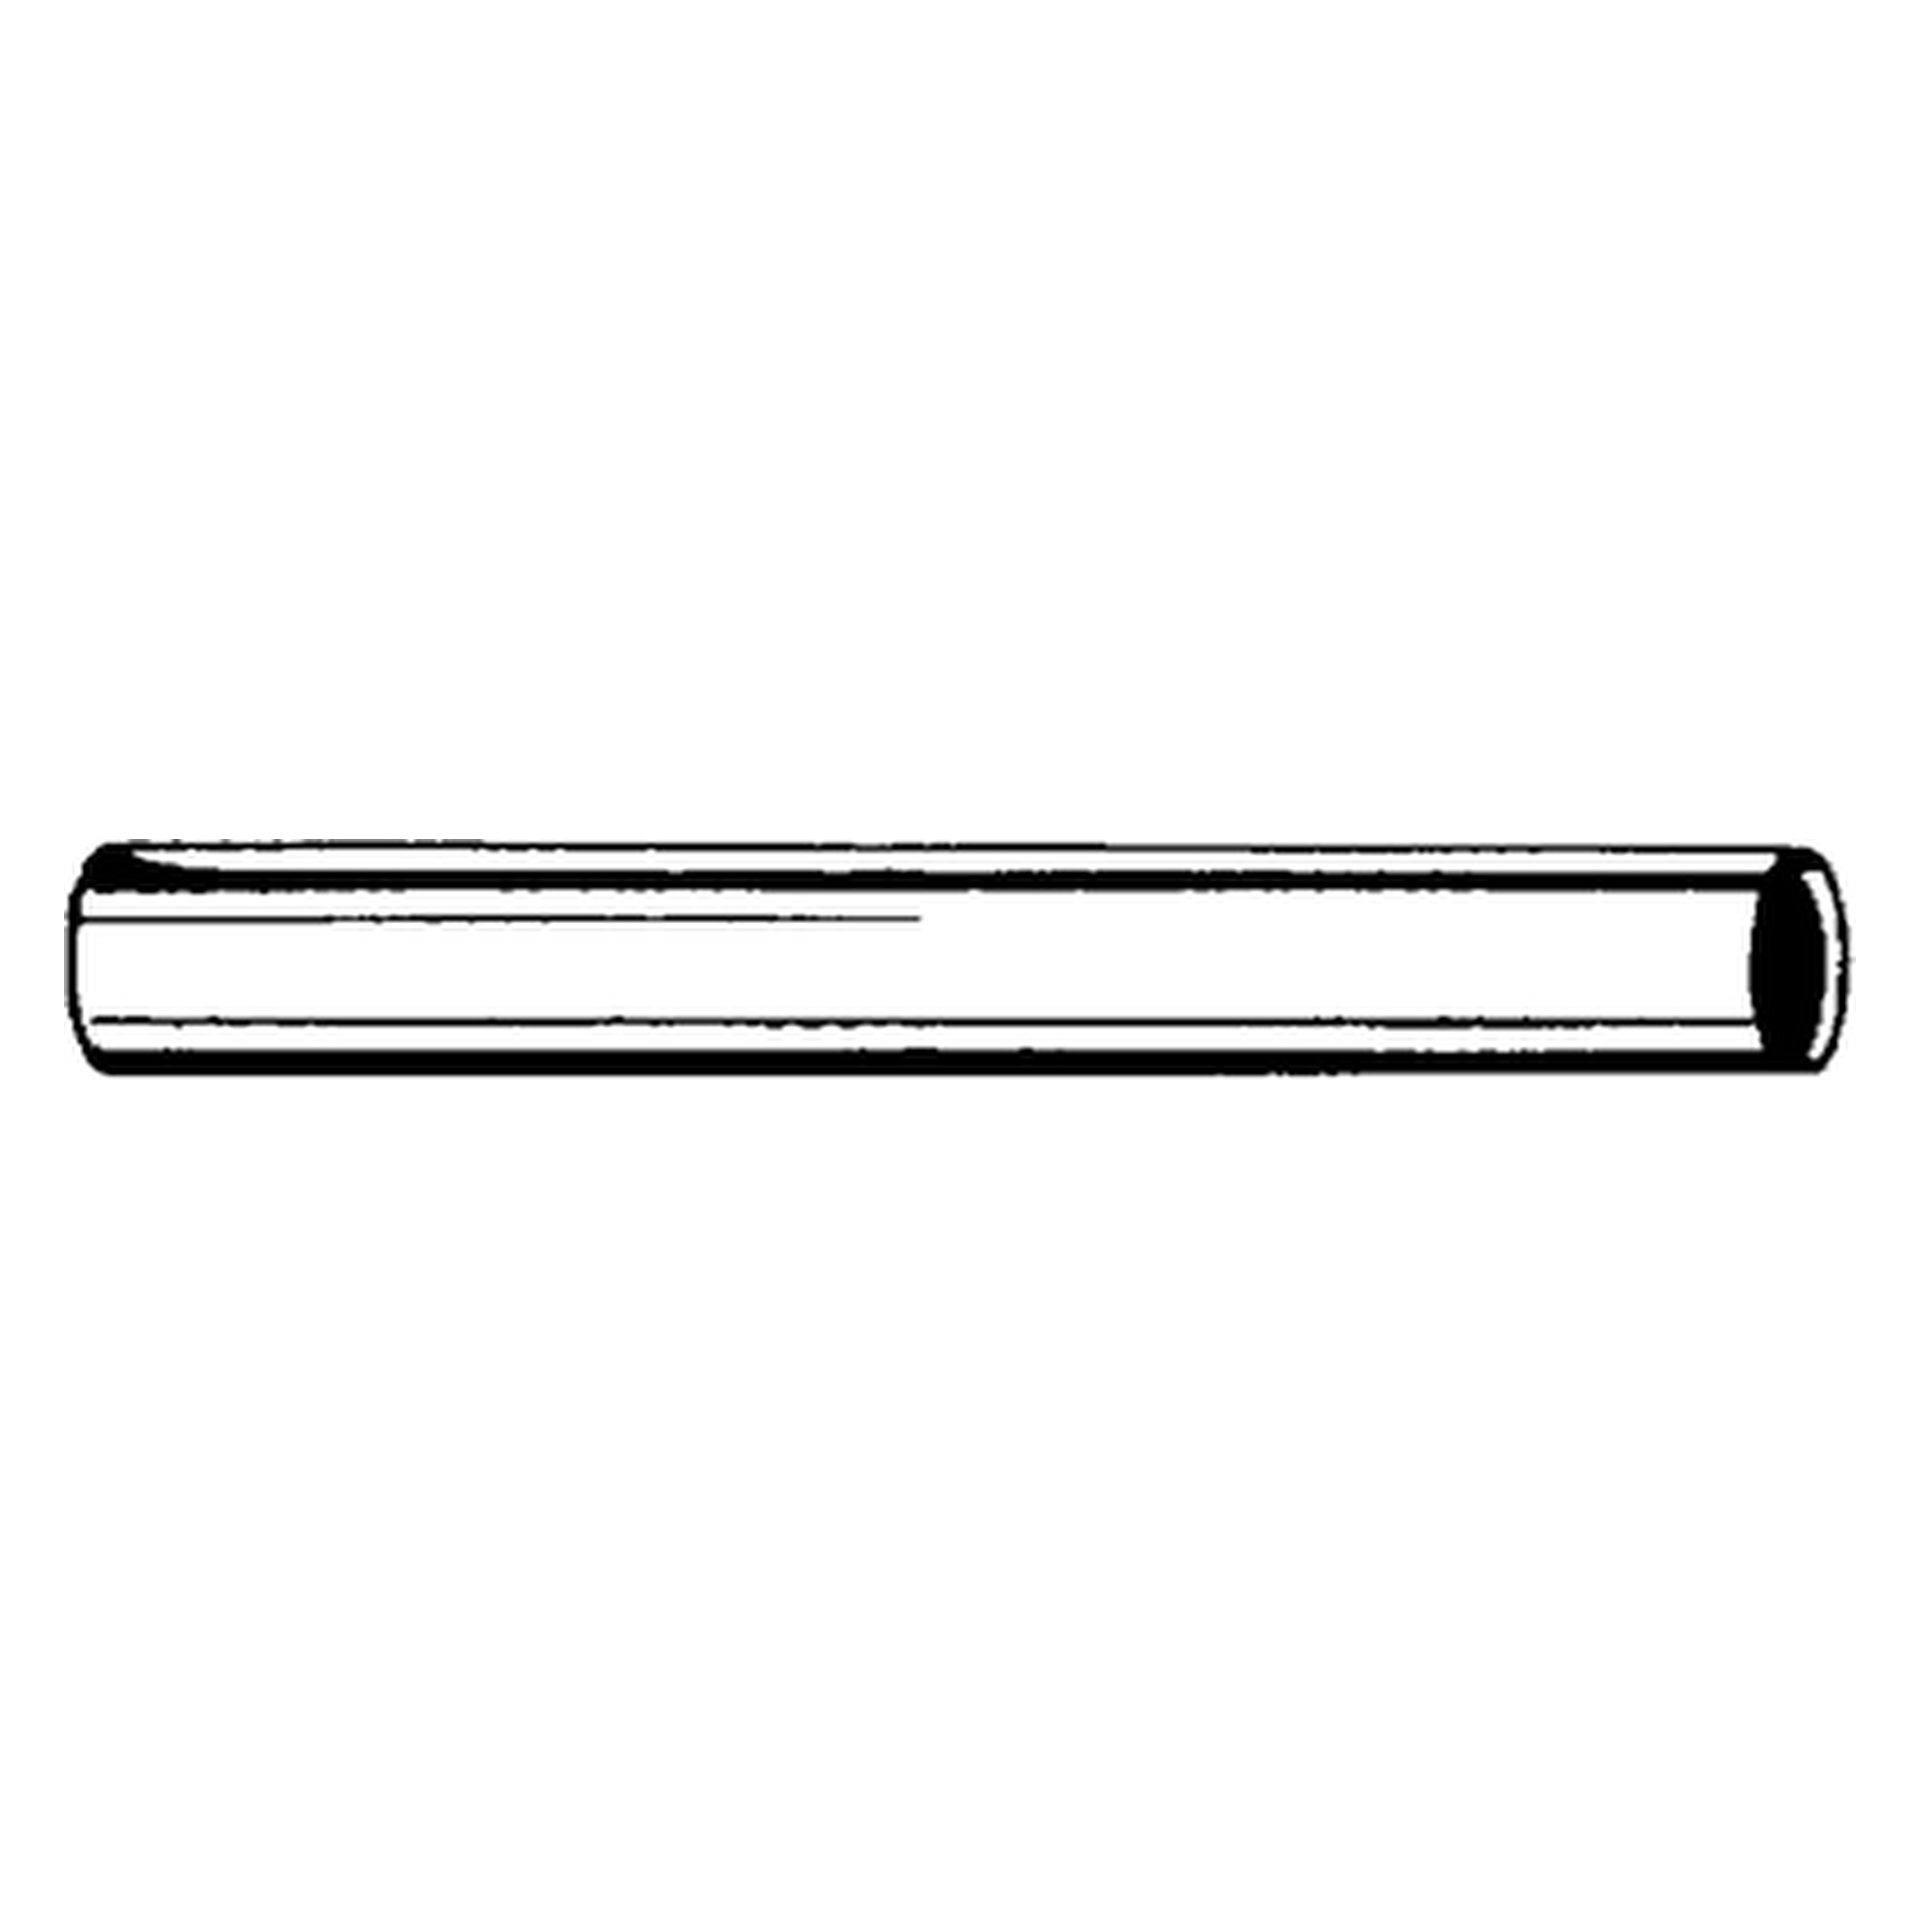 Abgangsrohr ohneBord 1 1/4" × 290mm chrom